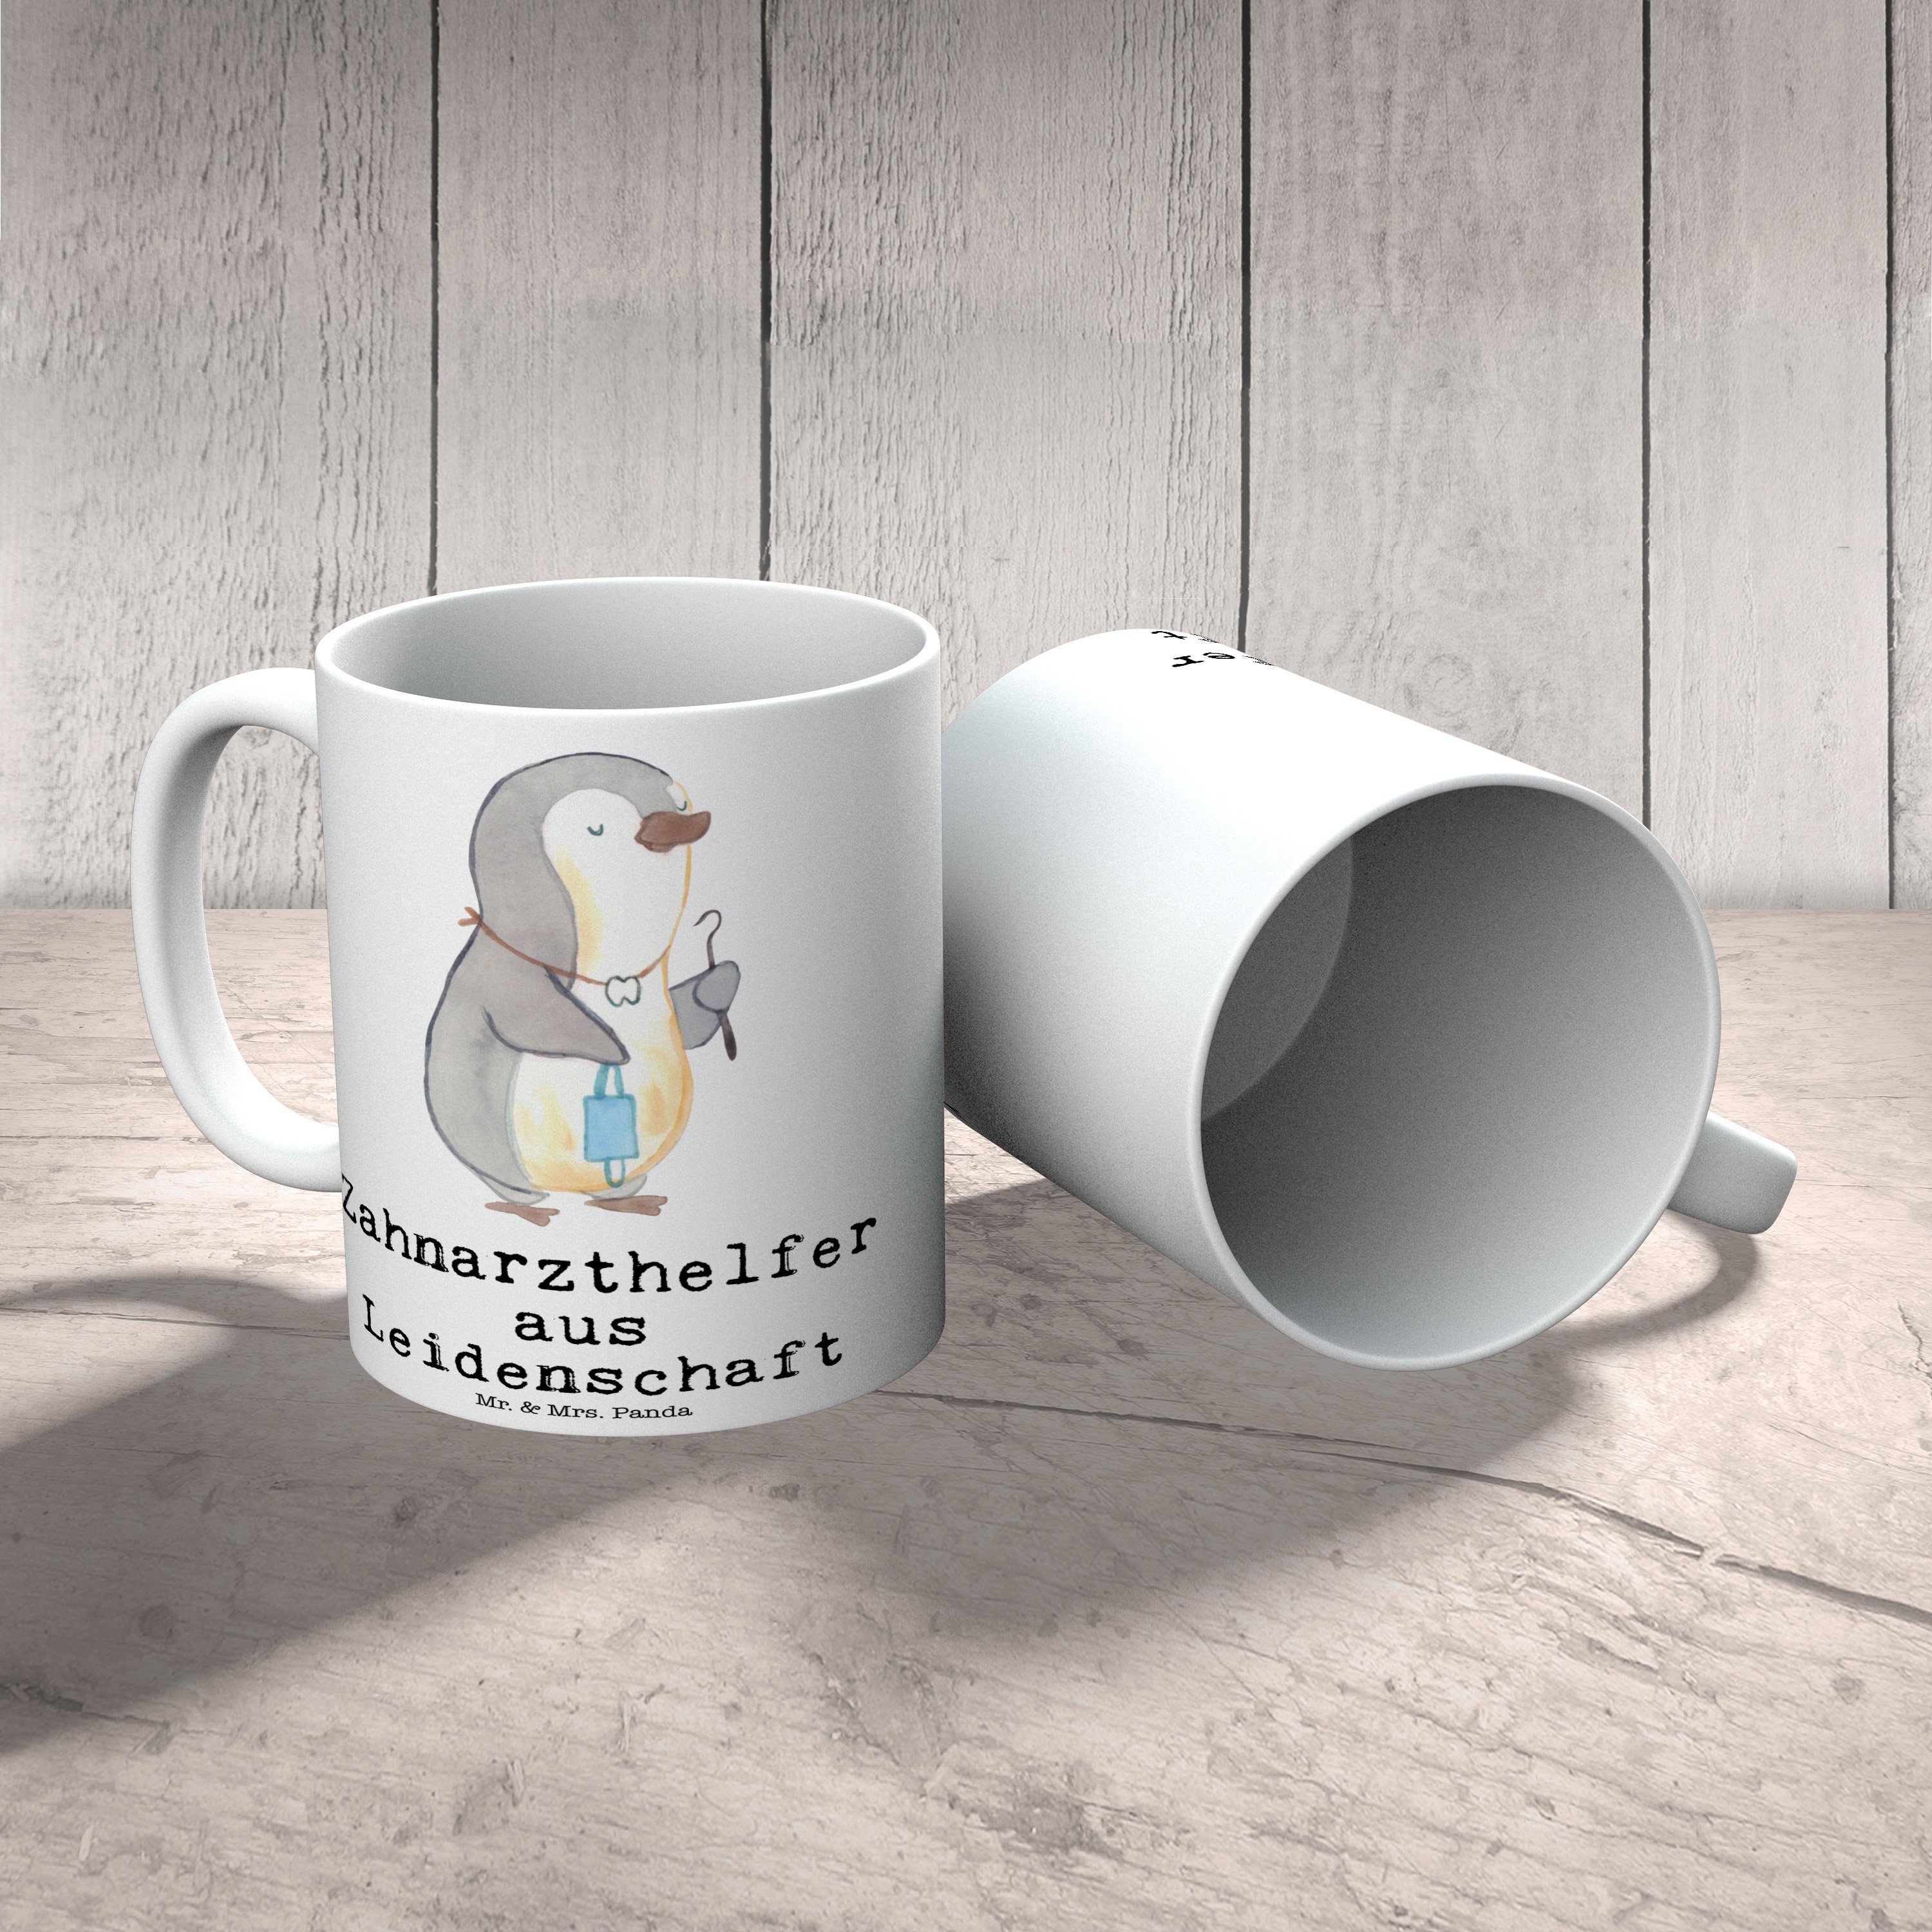 Kaffeebecher, aus Geschenk, Zahnarzthelfer Tasse Mr. - - Mrs. Panda & Weiß Sche, Leidenschaft Keramik